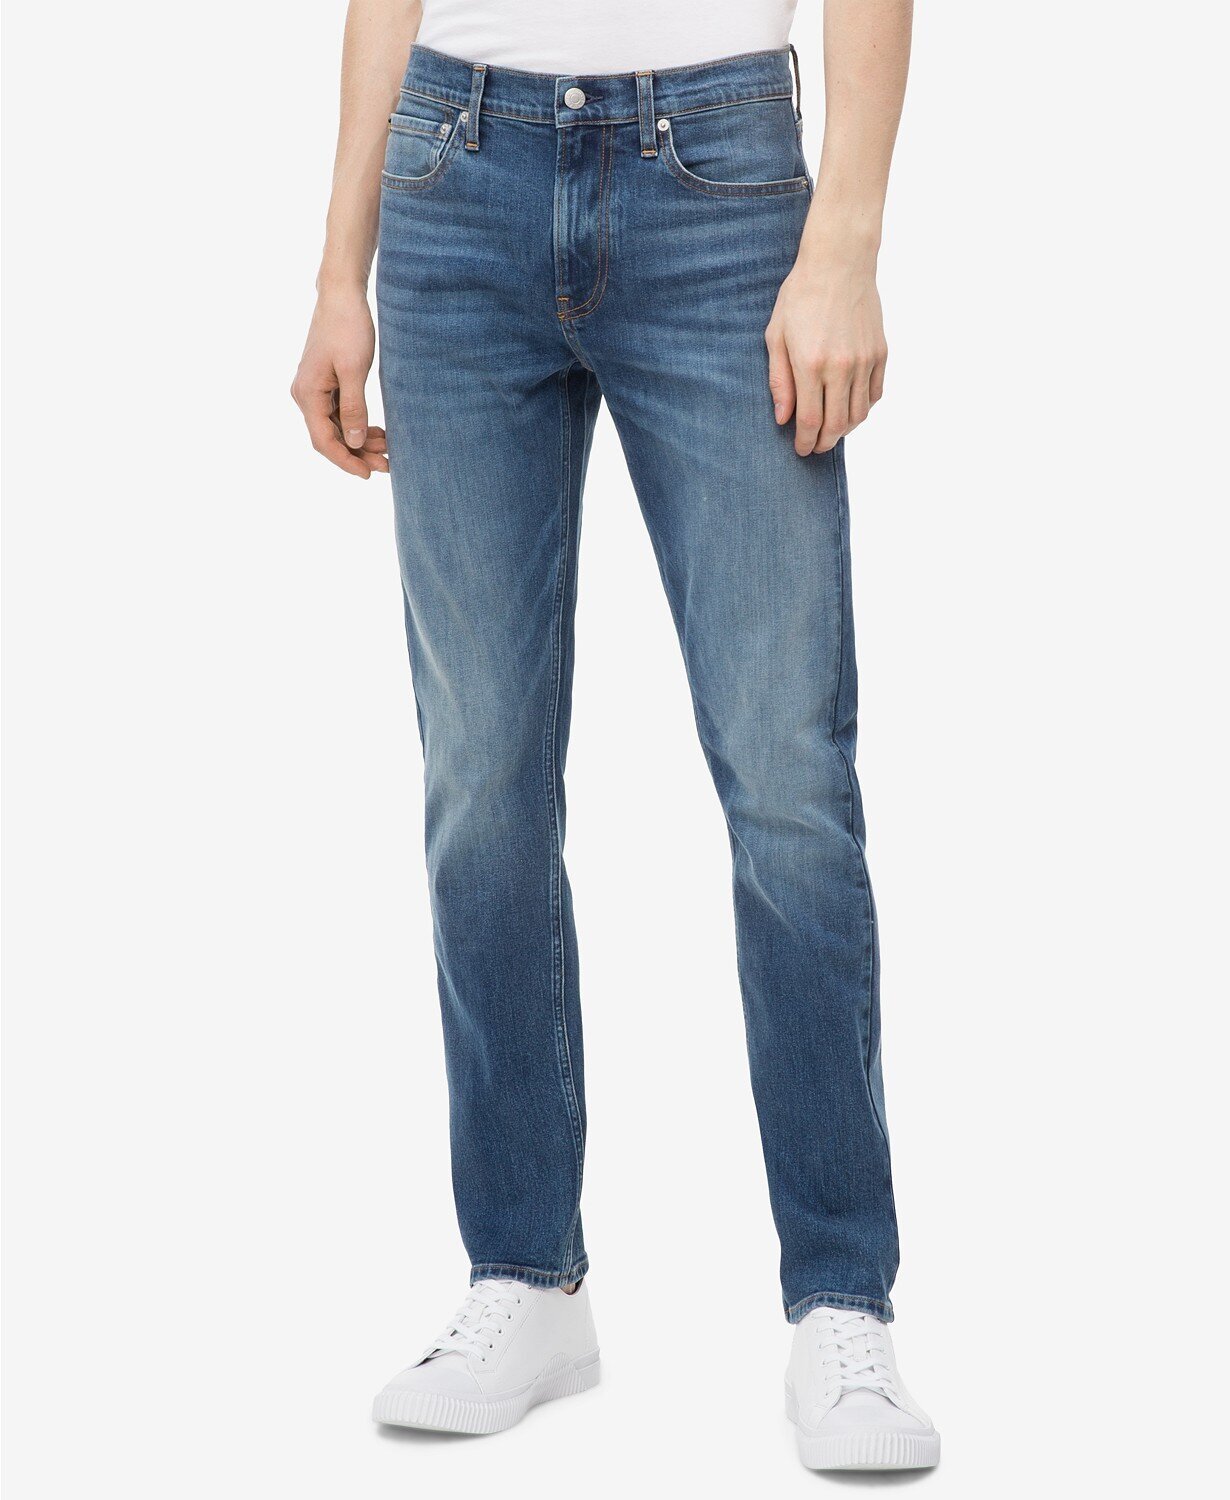 macys paige jeans